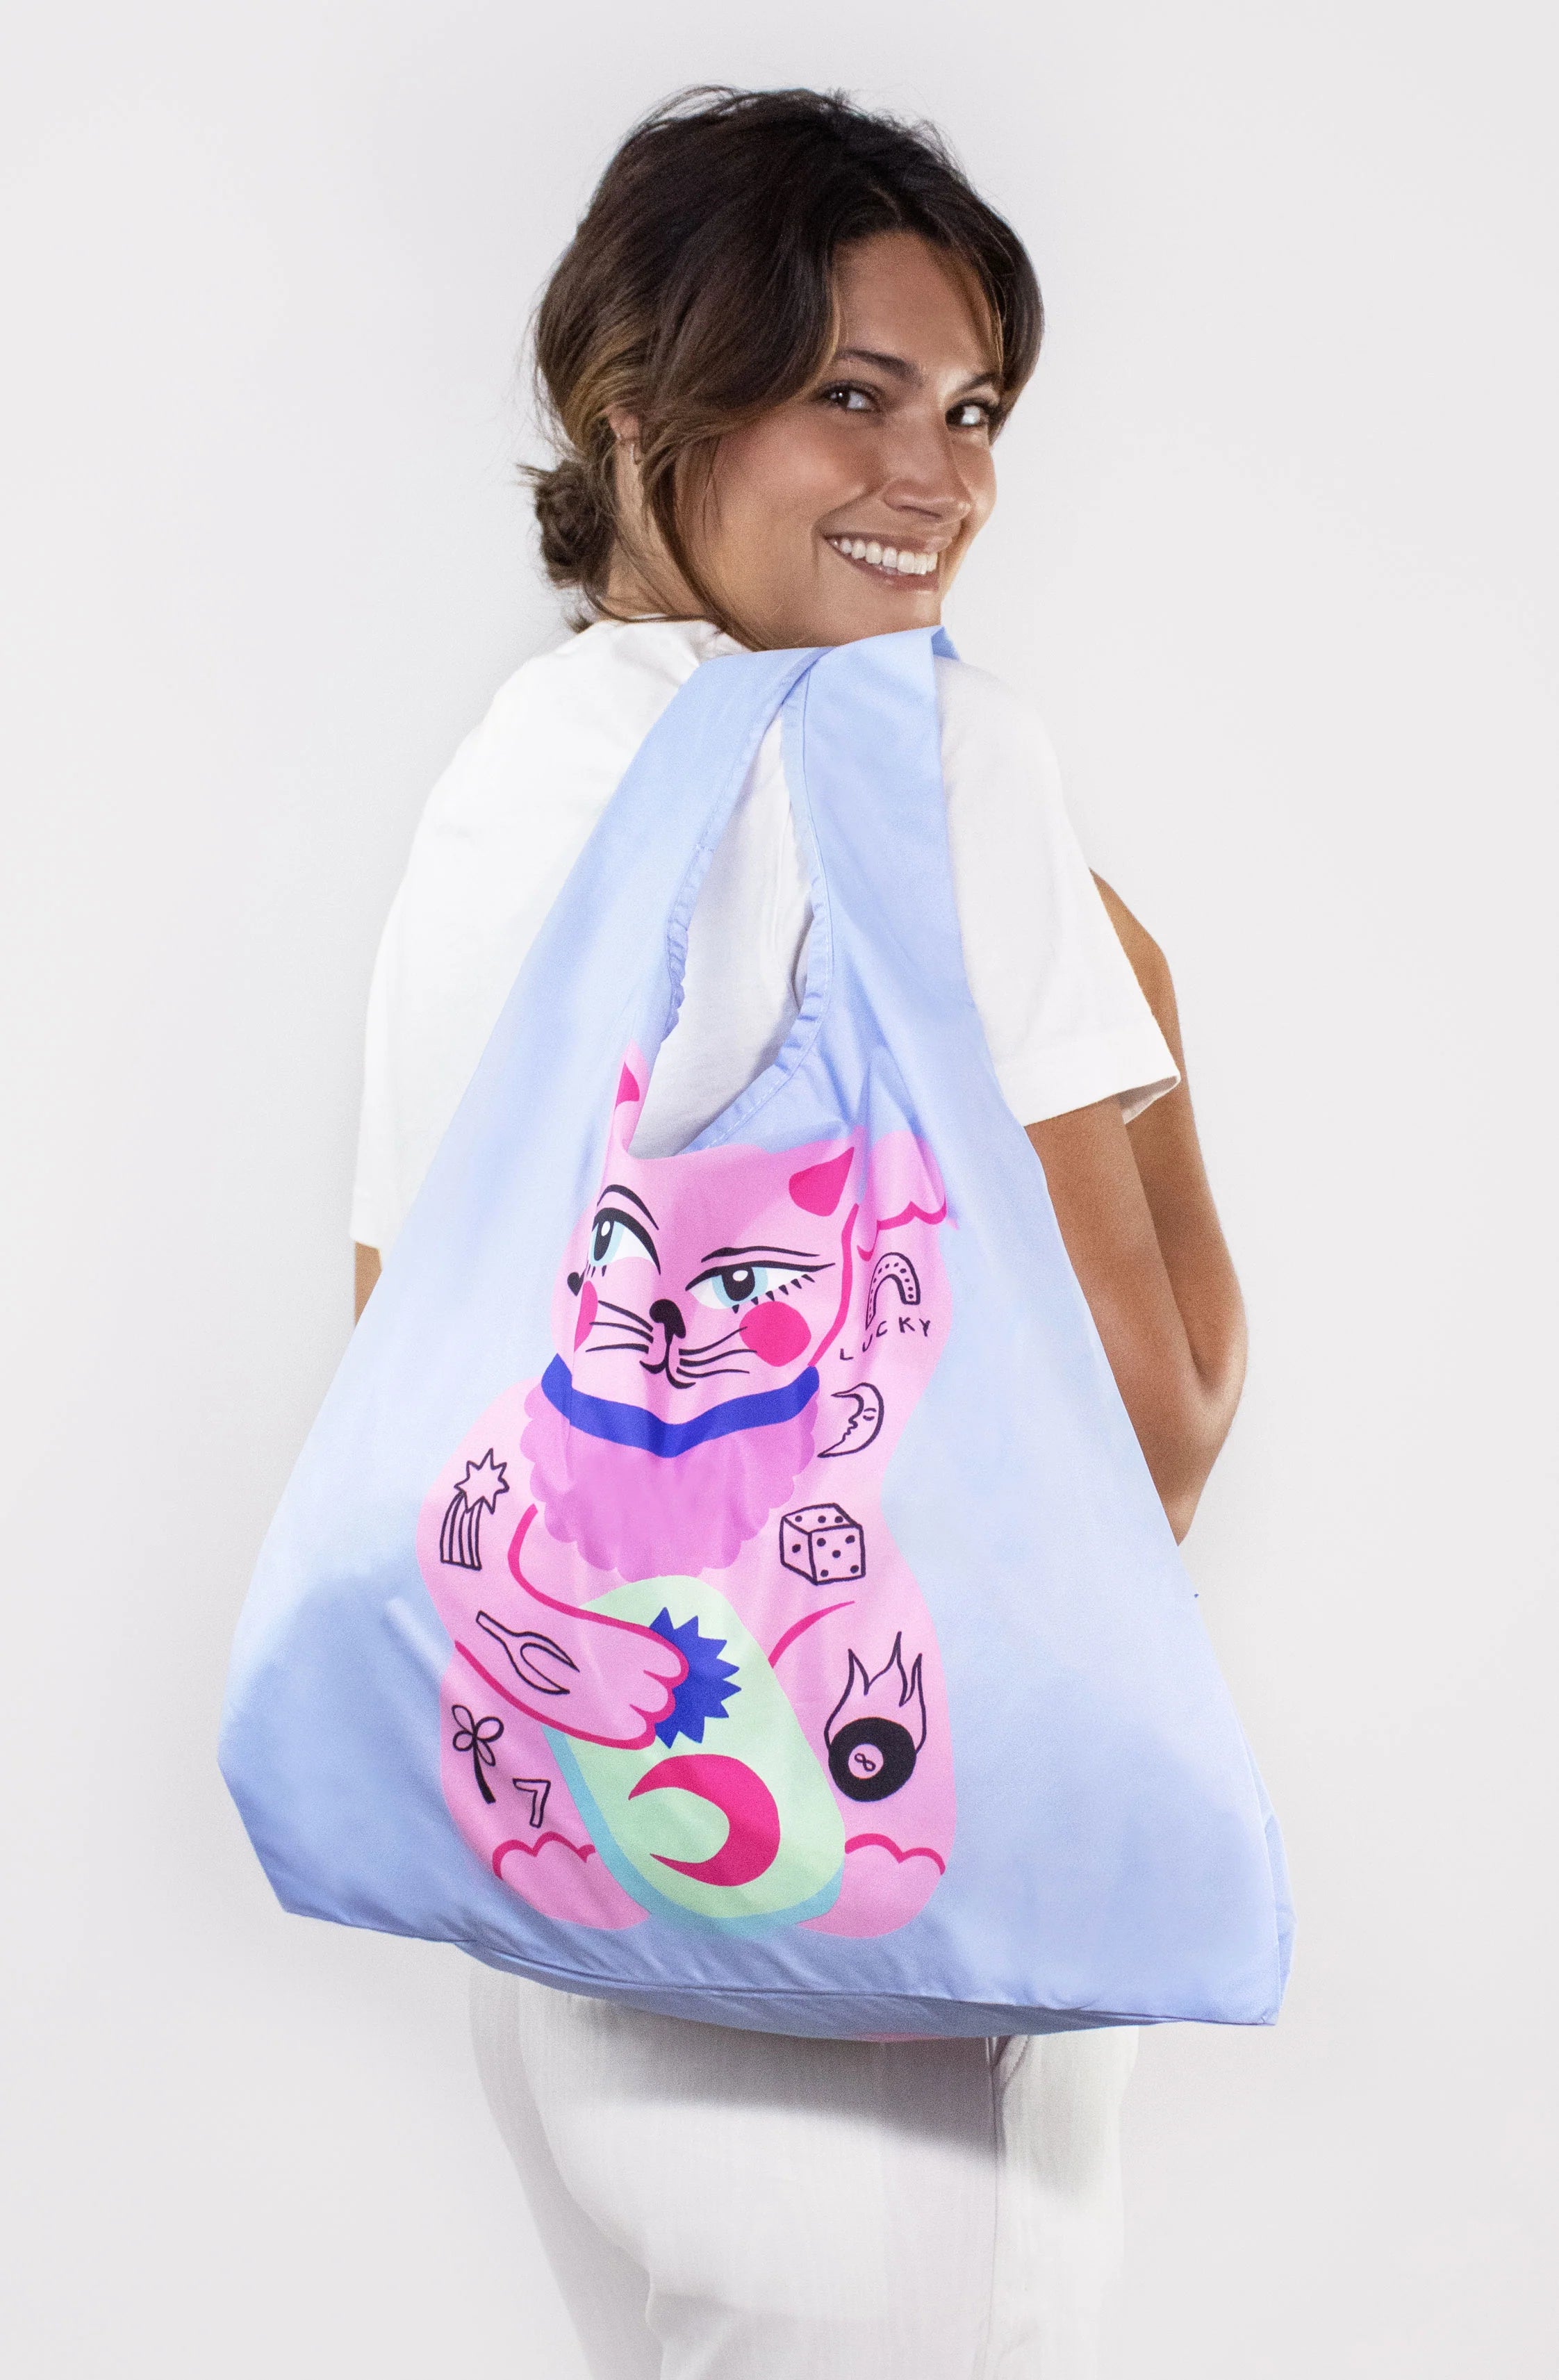 Lucky Cat Reusable Bag - medium